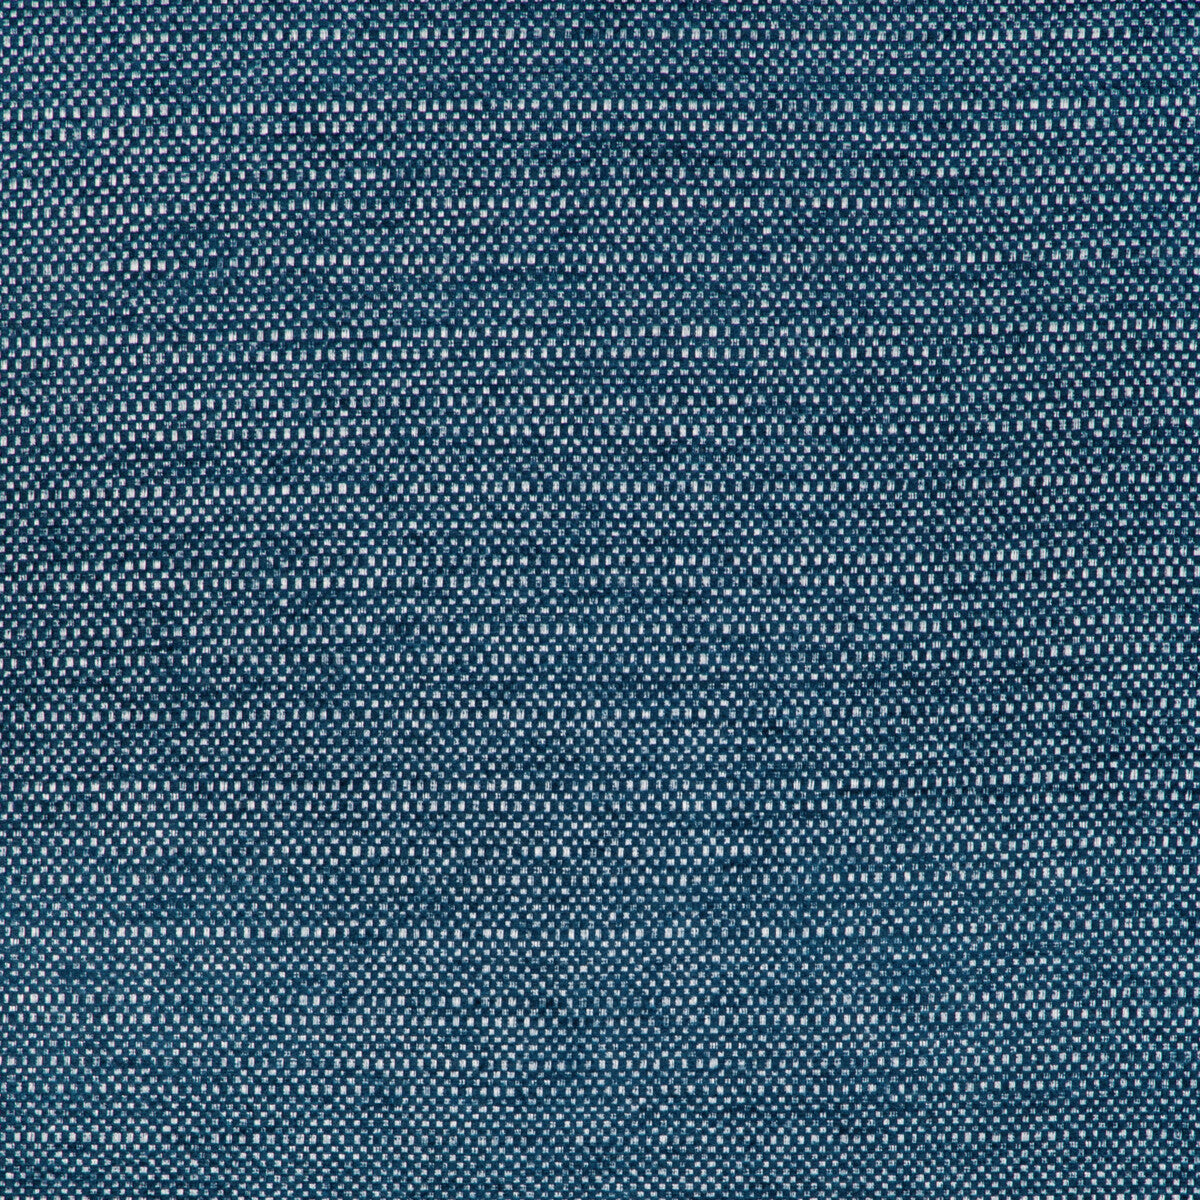 Kravet Design fabric in 36765-51 color - pattern 36765.51.0 - by Kravet Design in the Sea Island Indoor/Outdoor collection